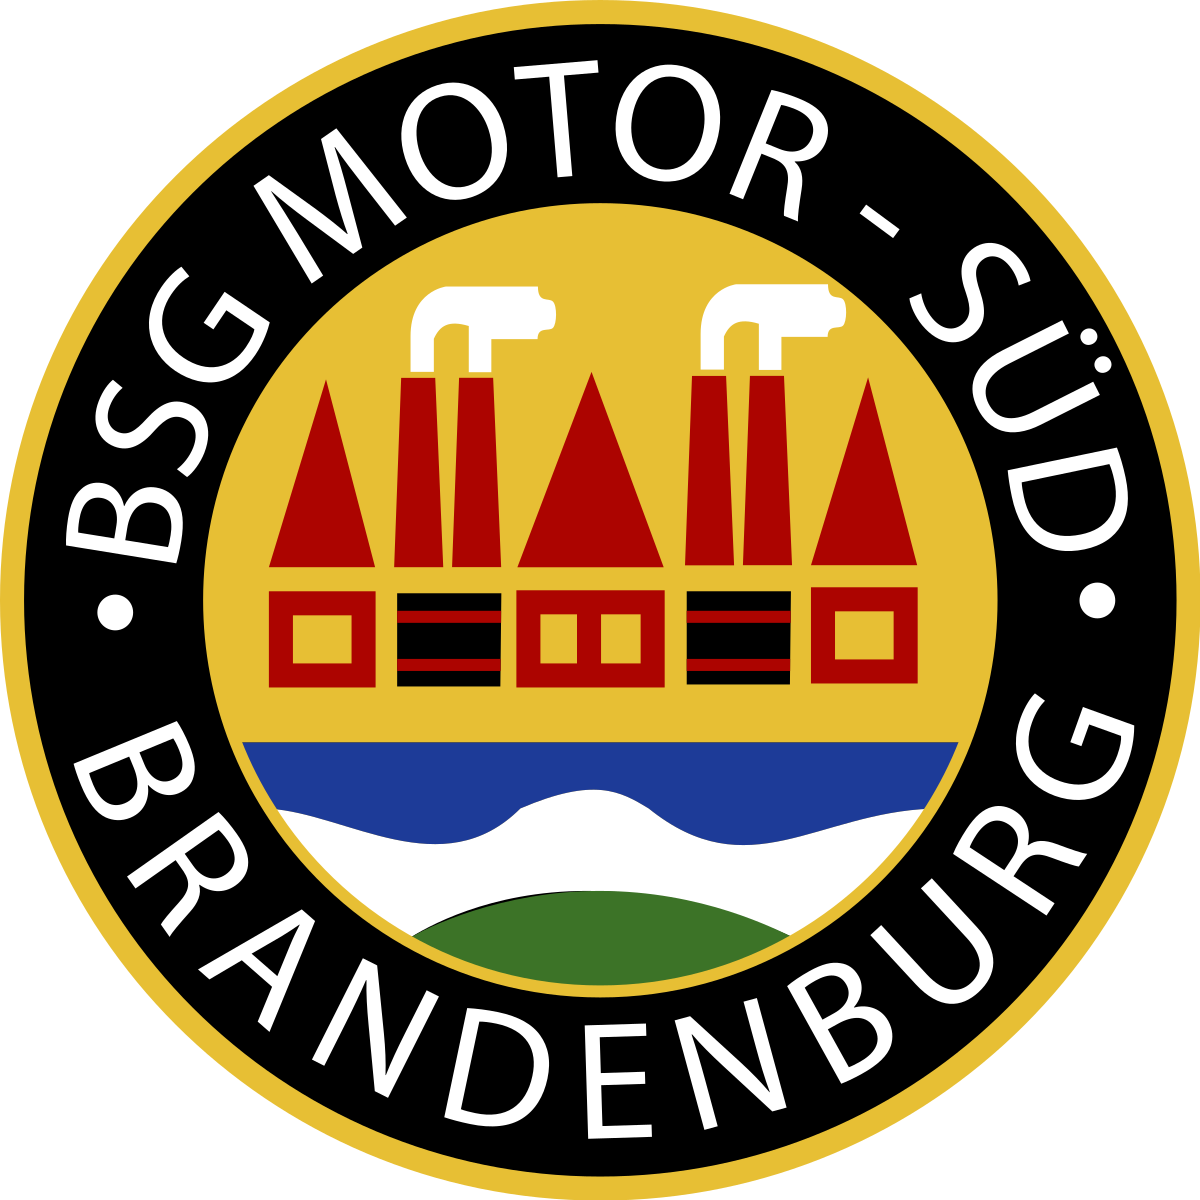 Brandenburger Sc